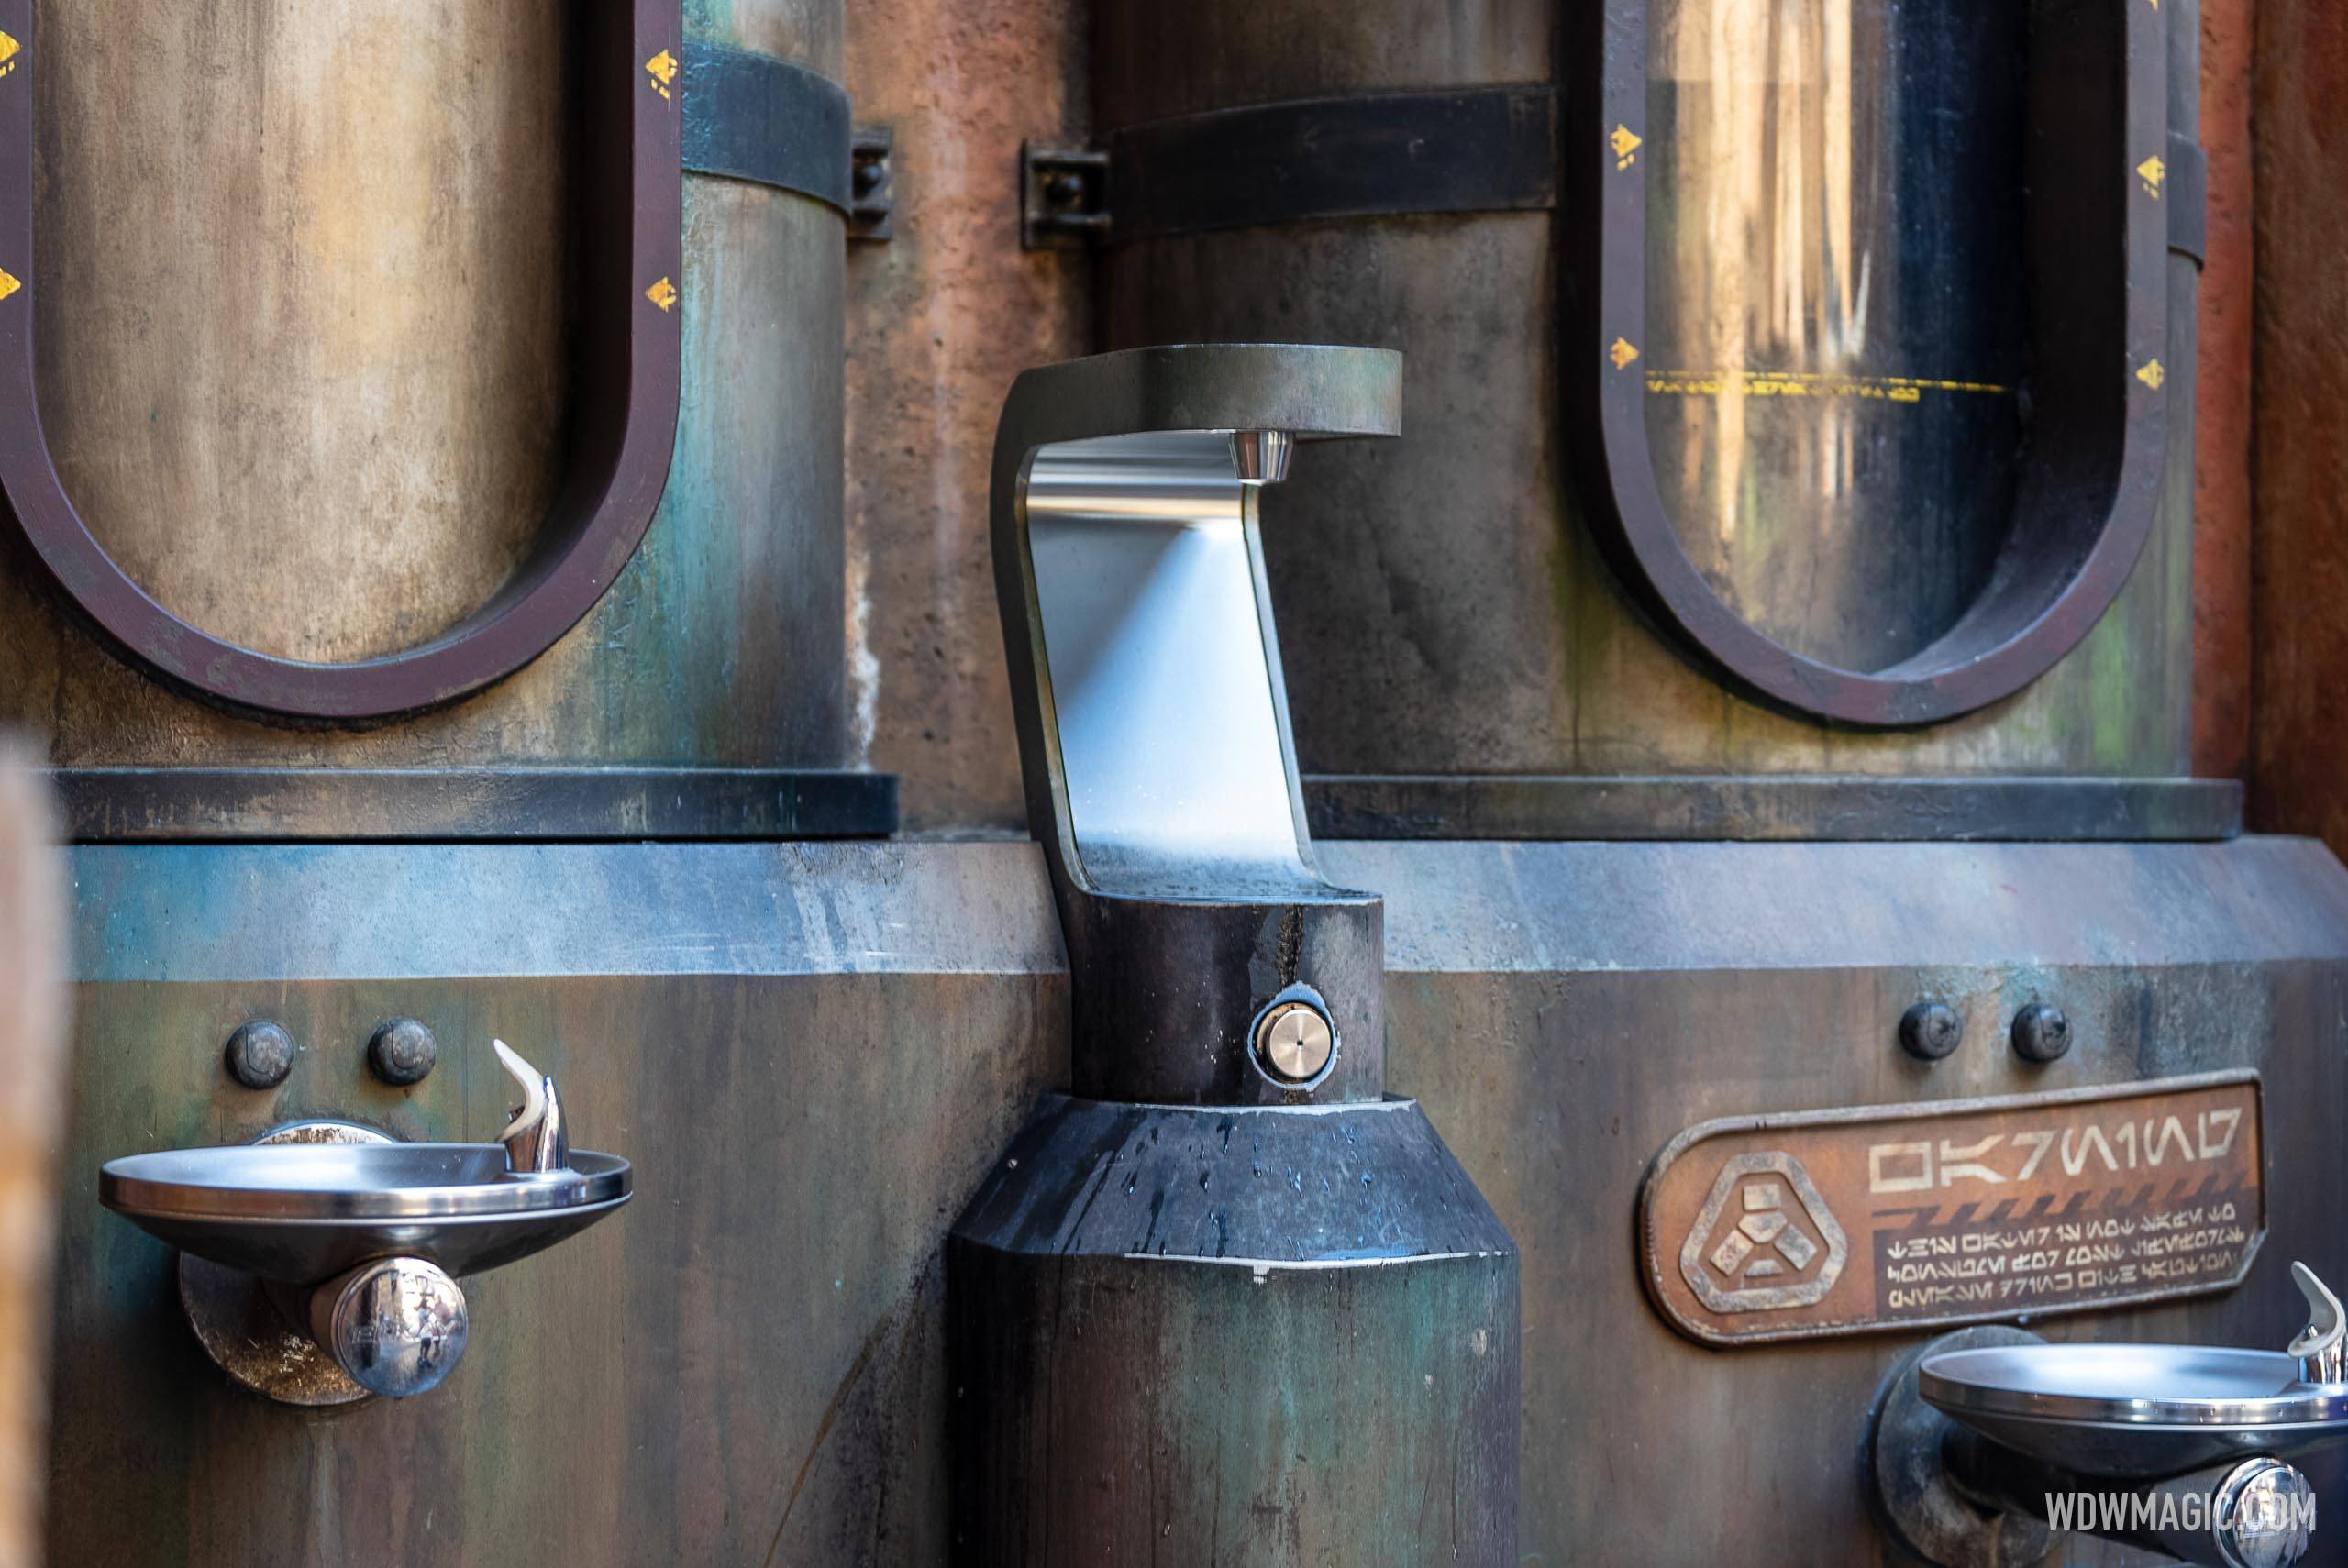 Water Bottle Refill Stations at Walt Disney World